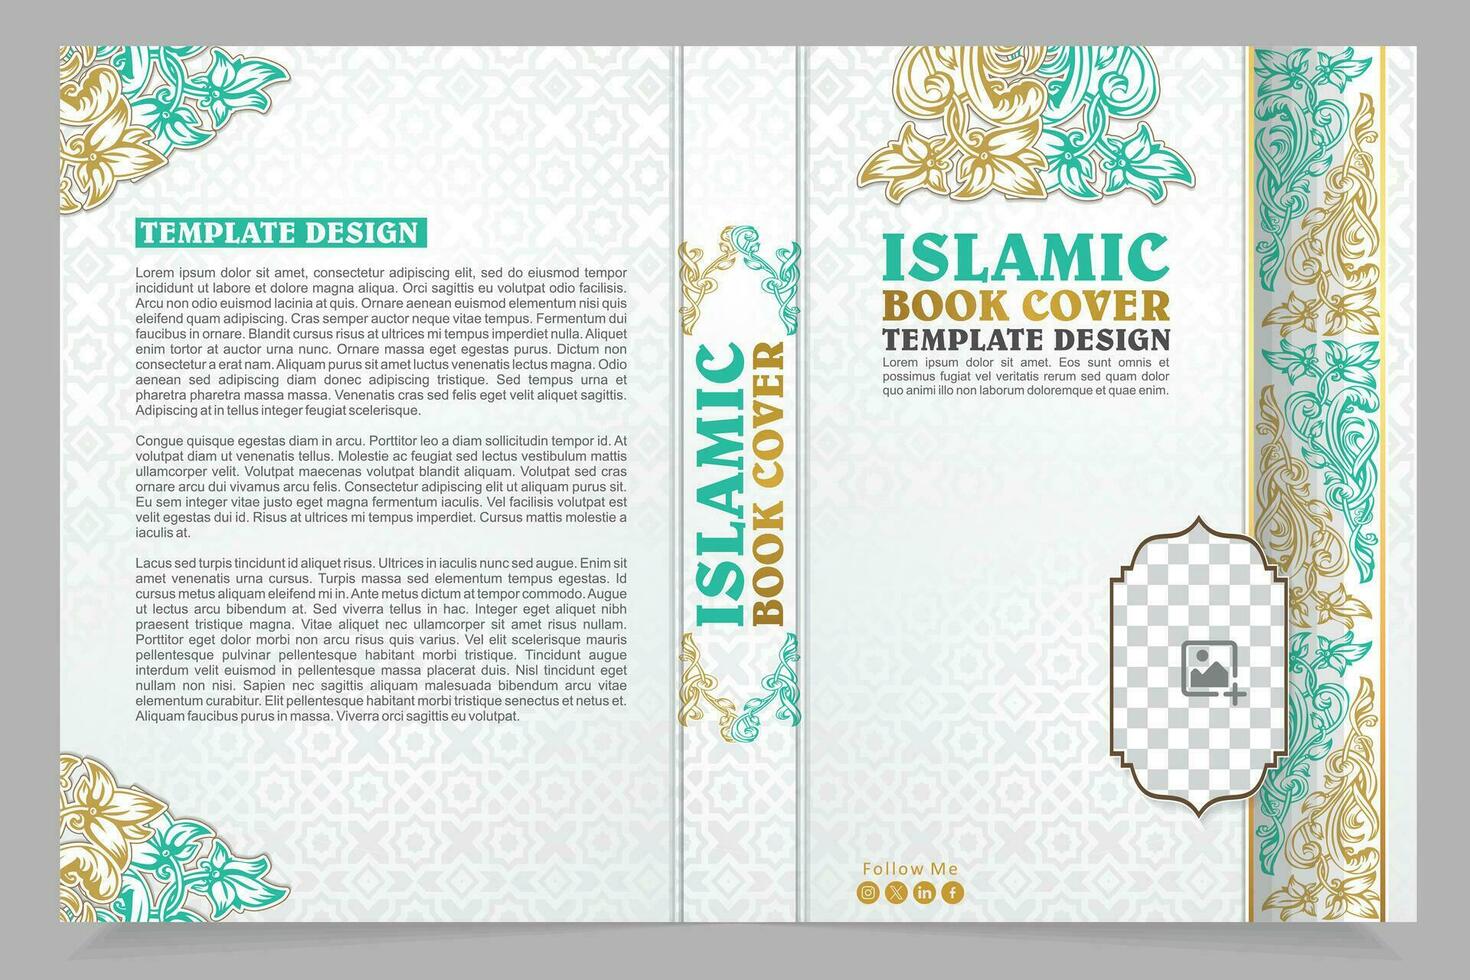 Arabic book cover design vector magazine cover page Islamic book cover brochure